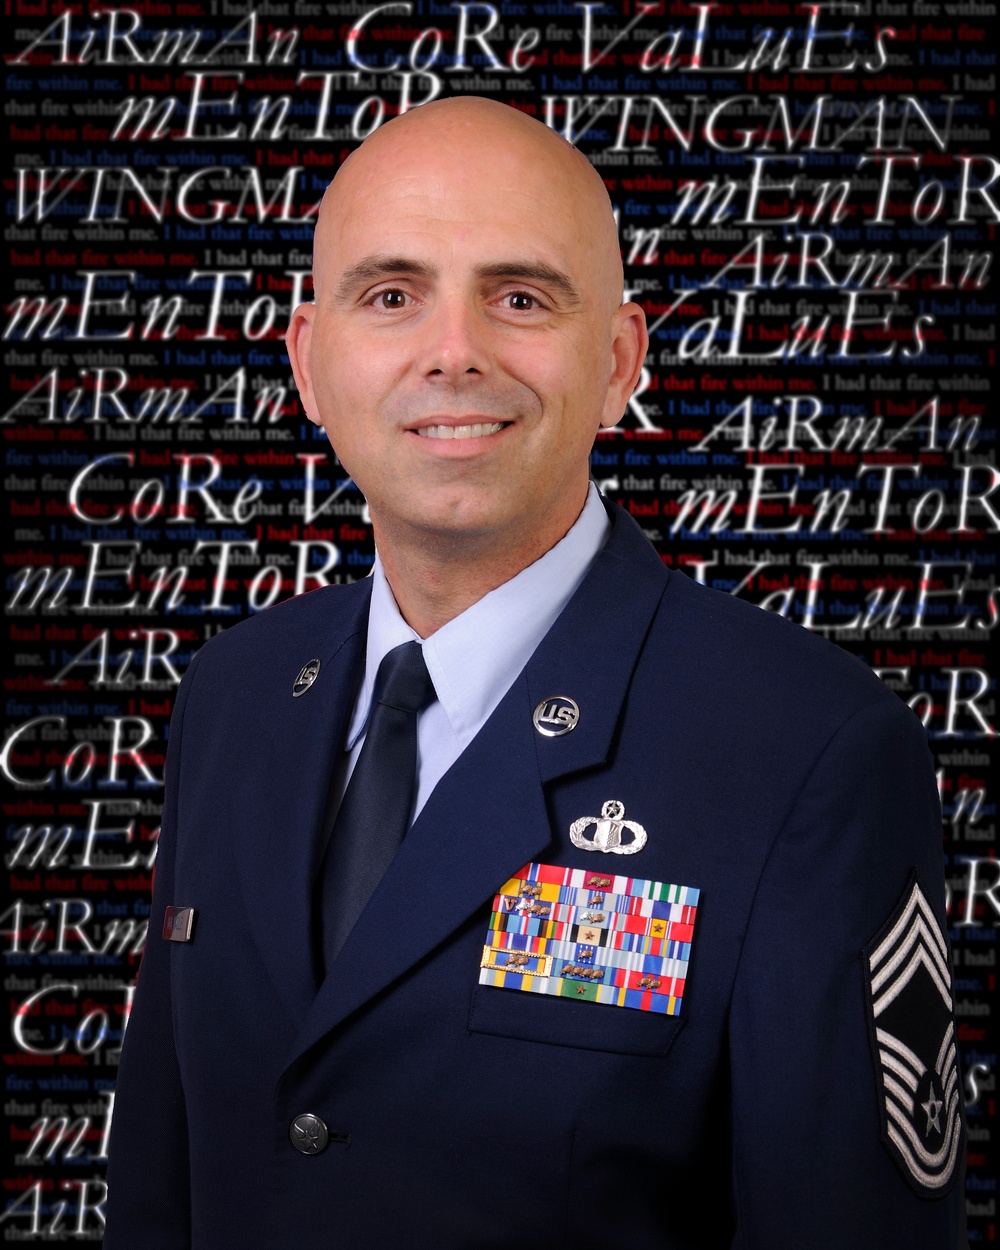 Command chief: An airman among airmen